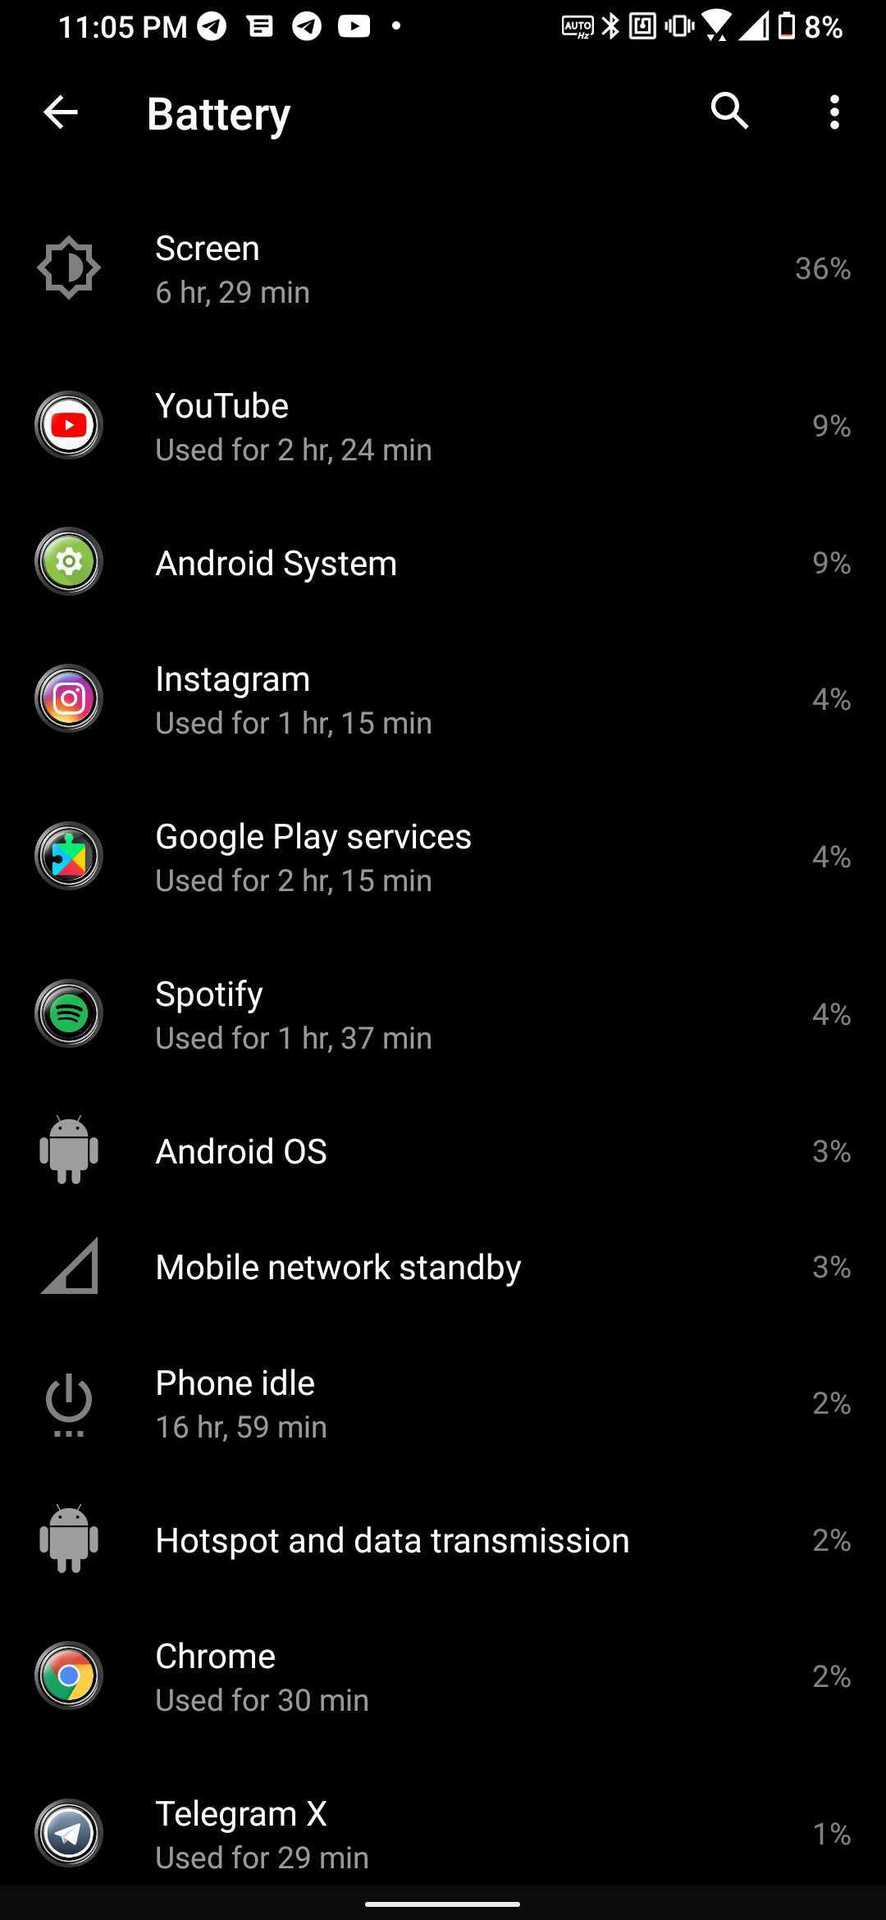 Asus ROG Phone 3 battery life 3